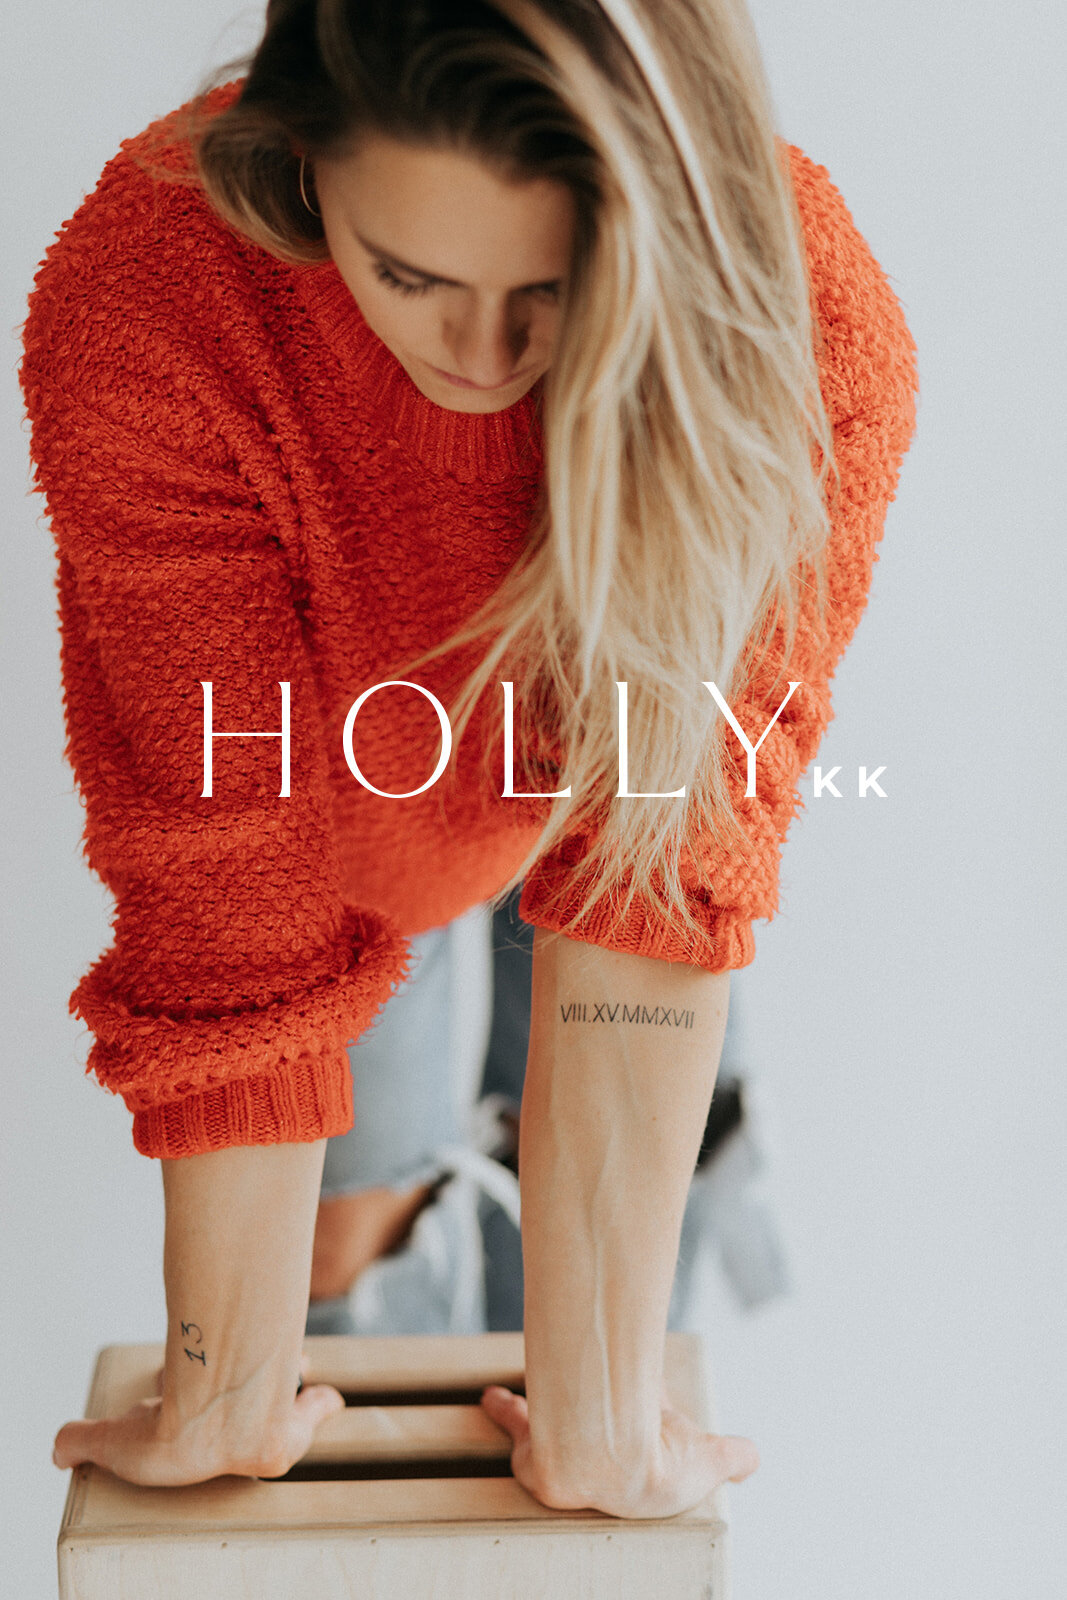 HollyKK_image_logo_3